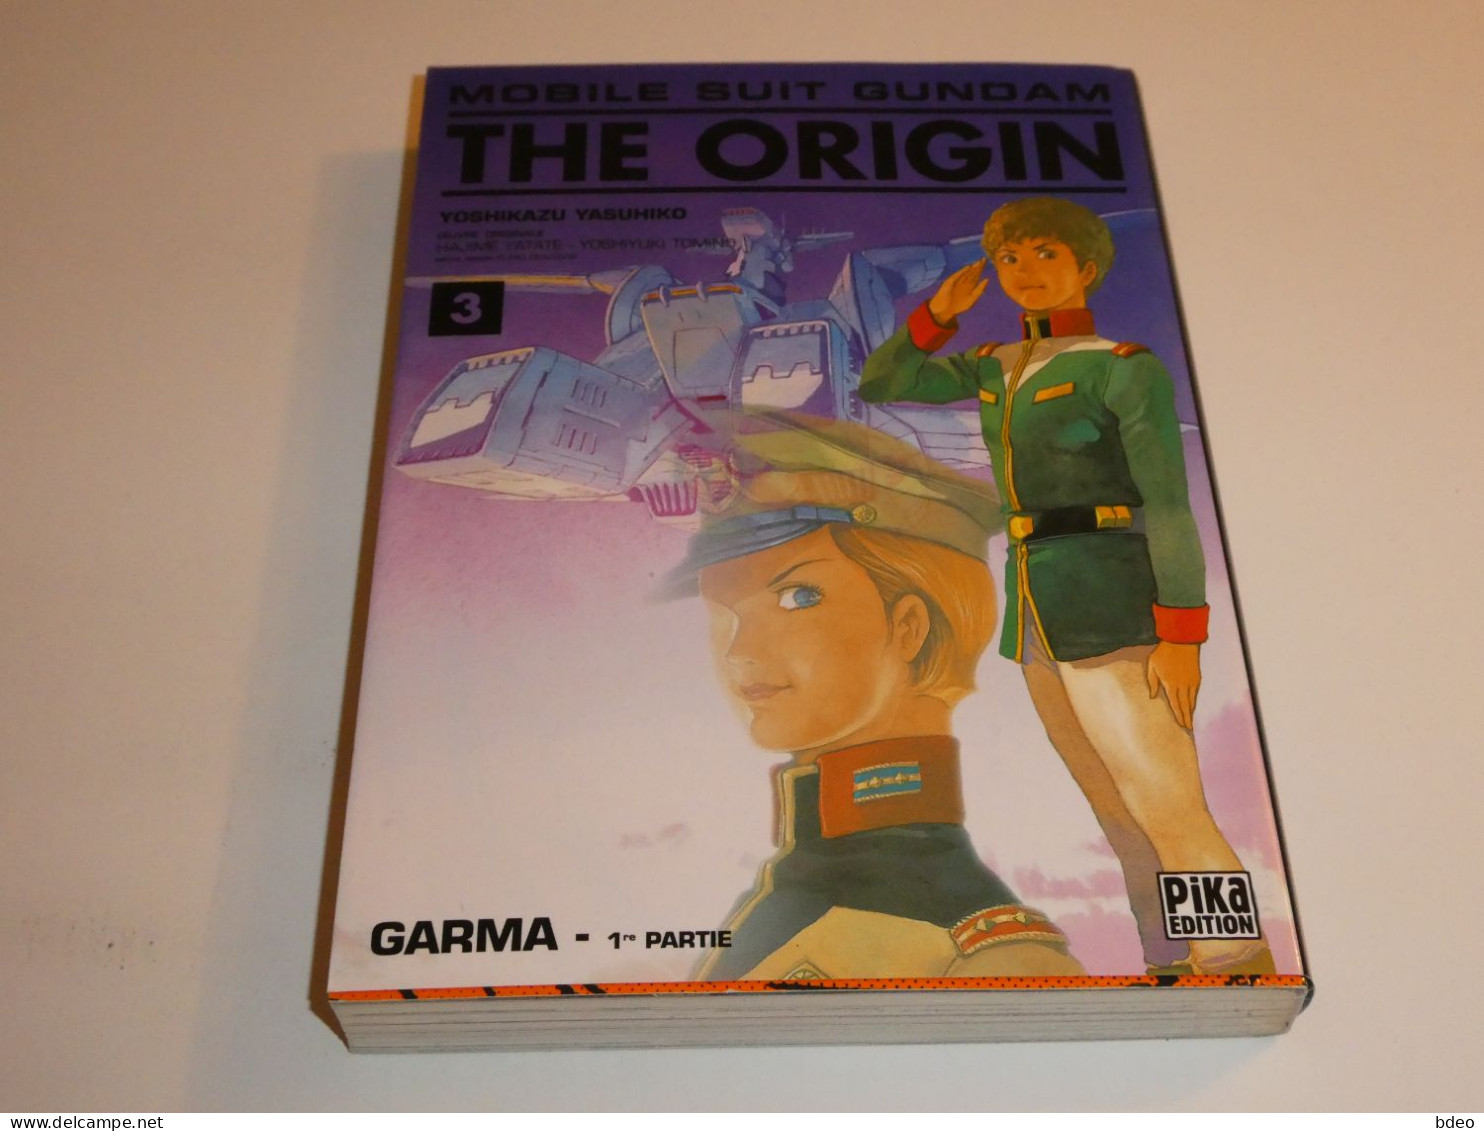 LOT MOBILE SUIT GUNDAM THE ORIGIN TOMES 3/5/7 / TBE - Manga [franse Uitgave]